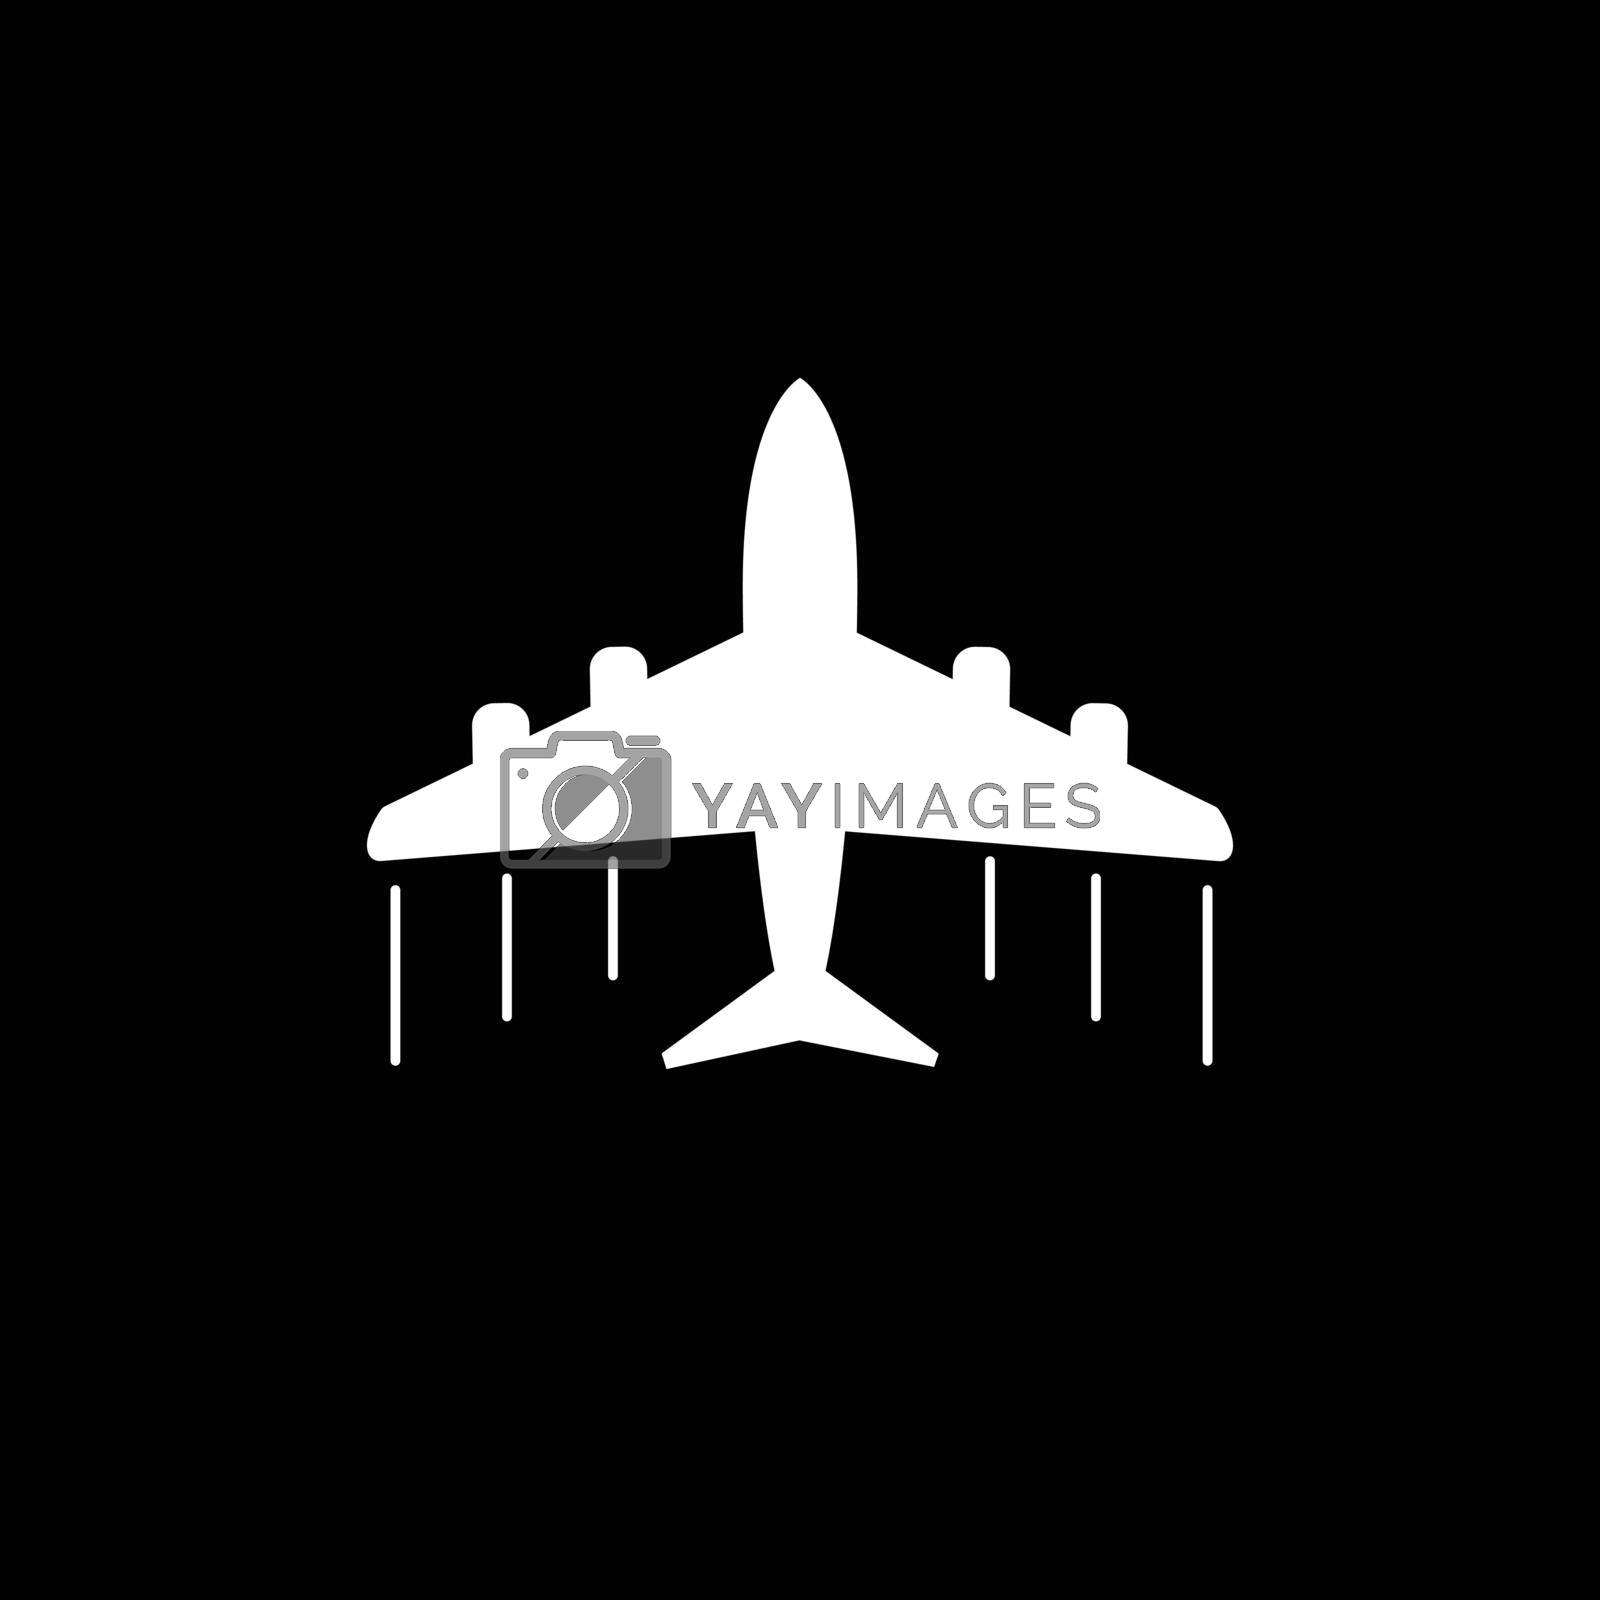 Plane icon. Airplane flat vector illustration on grey background